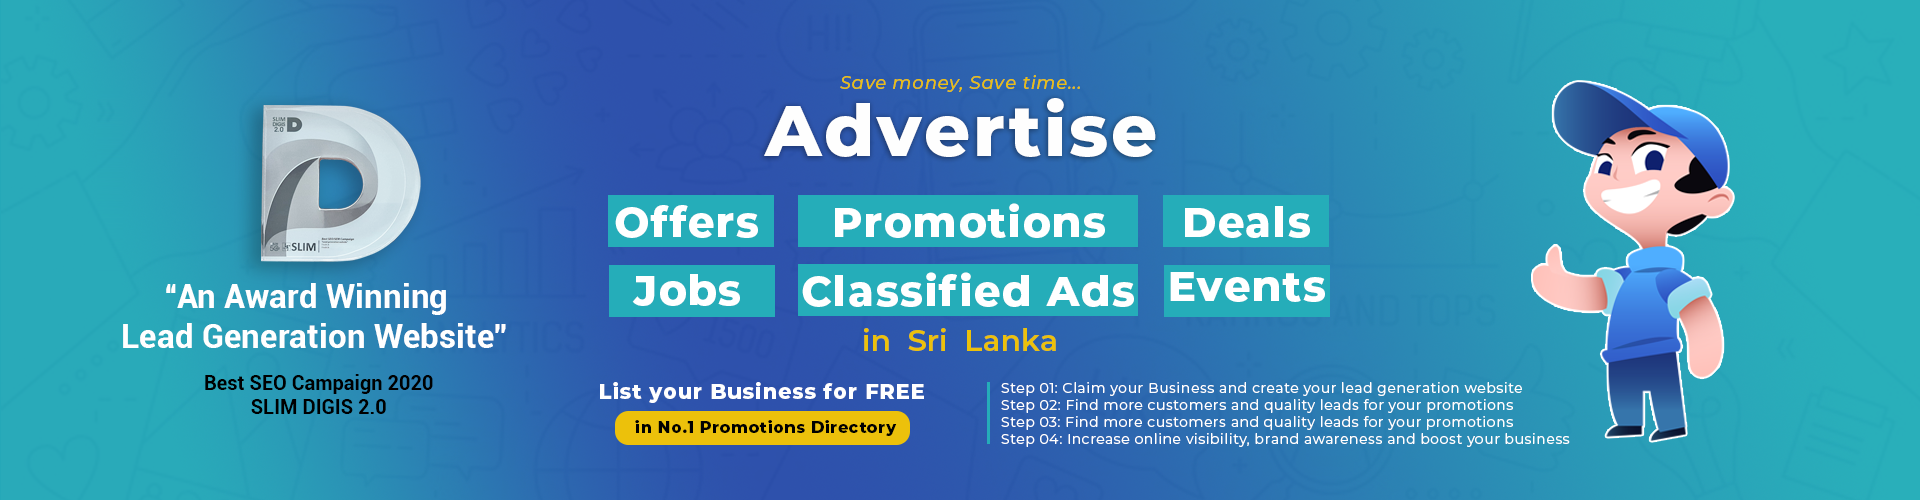 advertise-banner